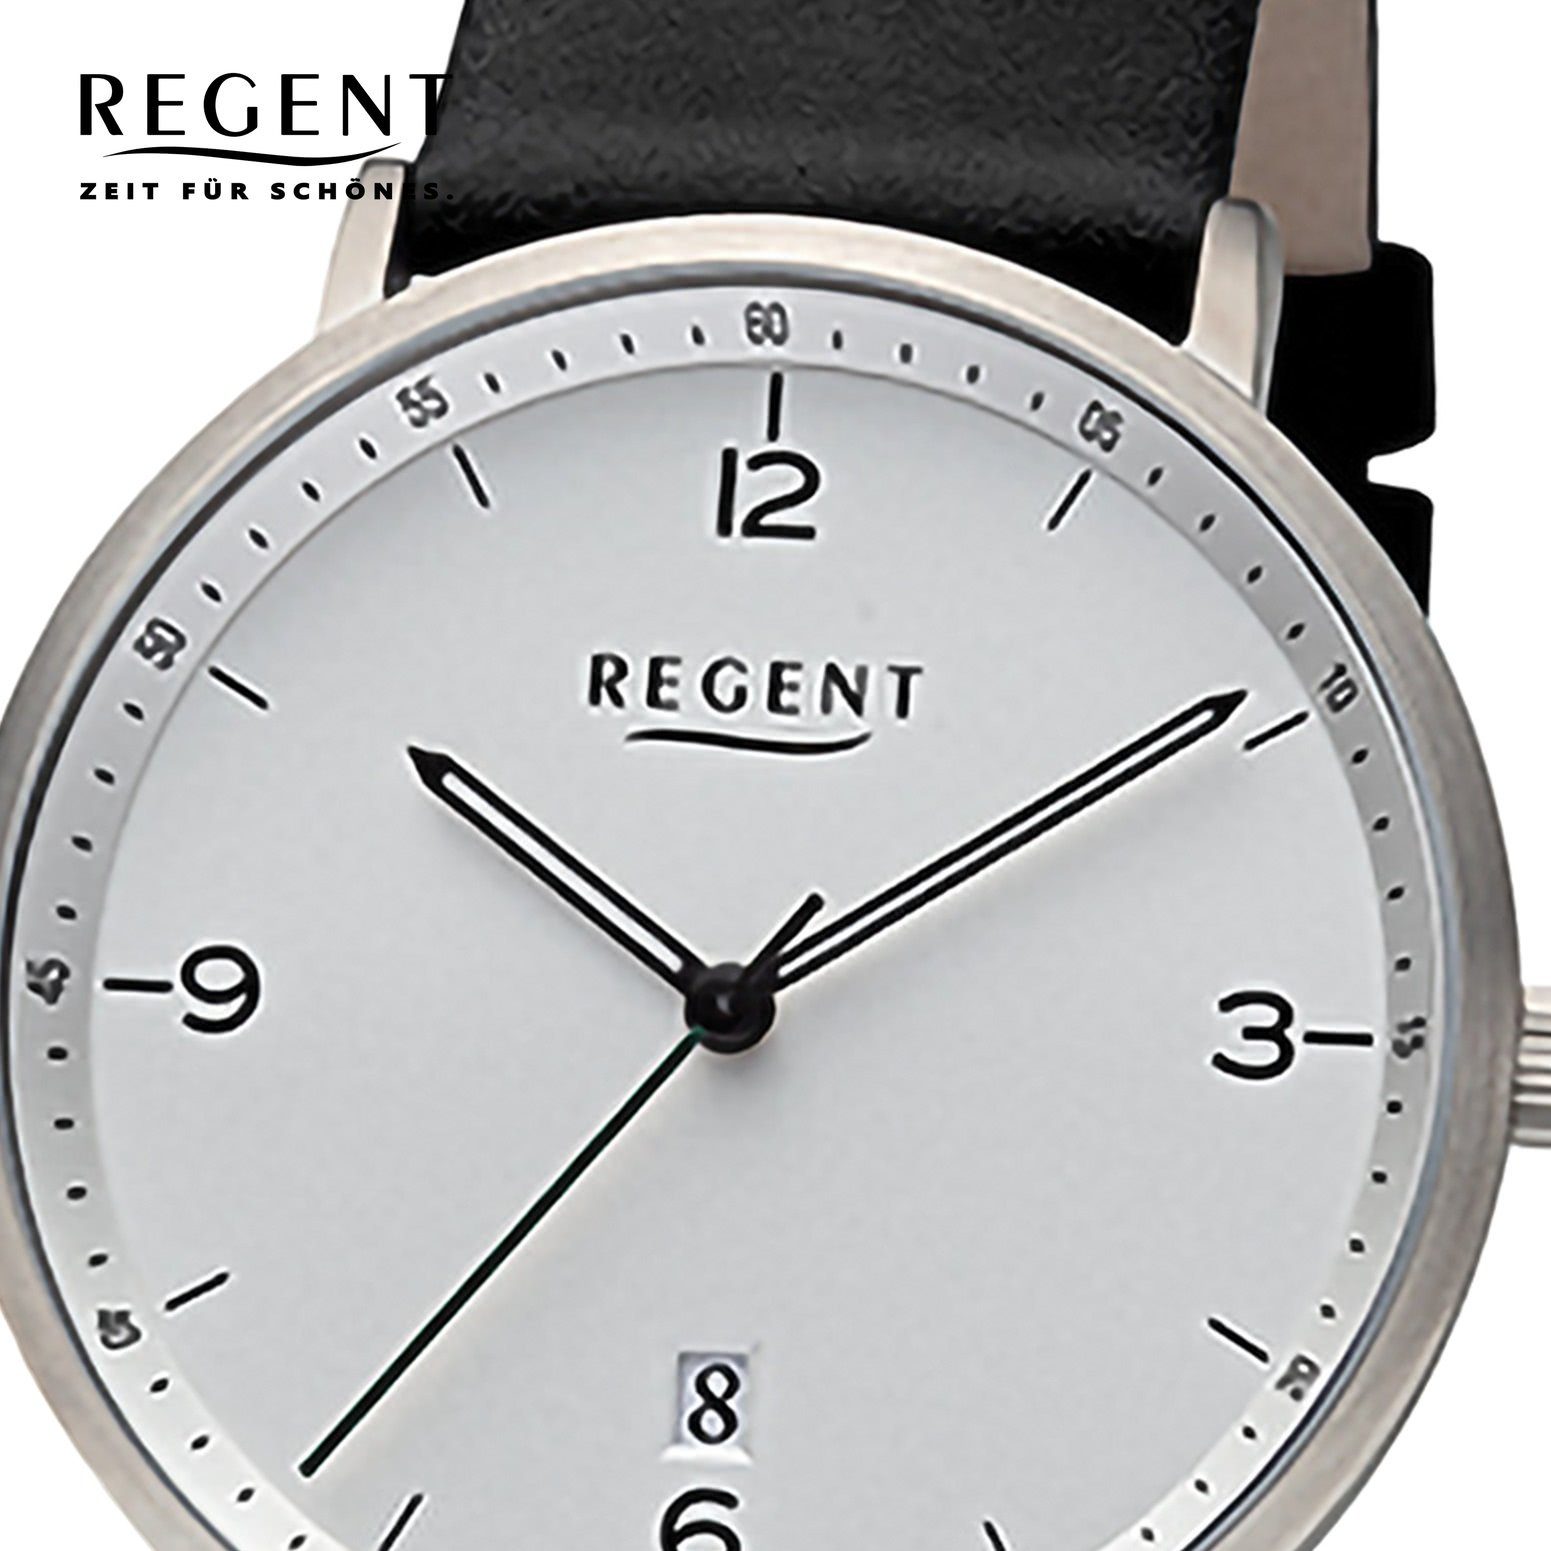 Regent Regent Herren Herren 39mm), groß Armbanduhr rund, Quarzuhr (ca. Armbanduhr Lederarmband Analog, extra